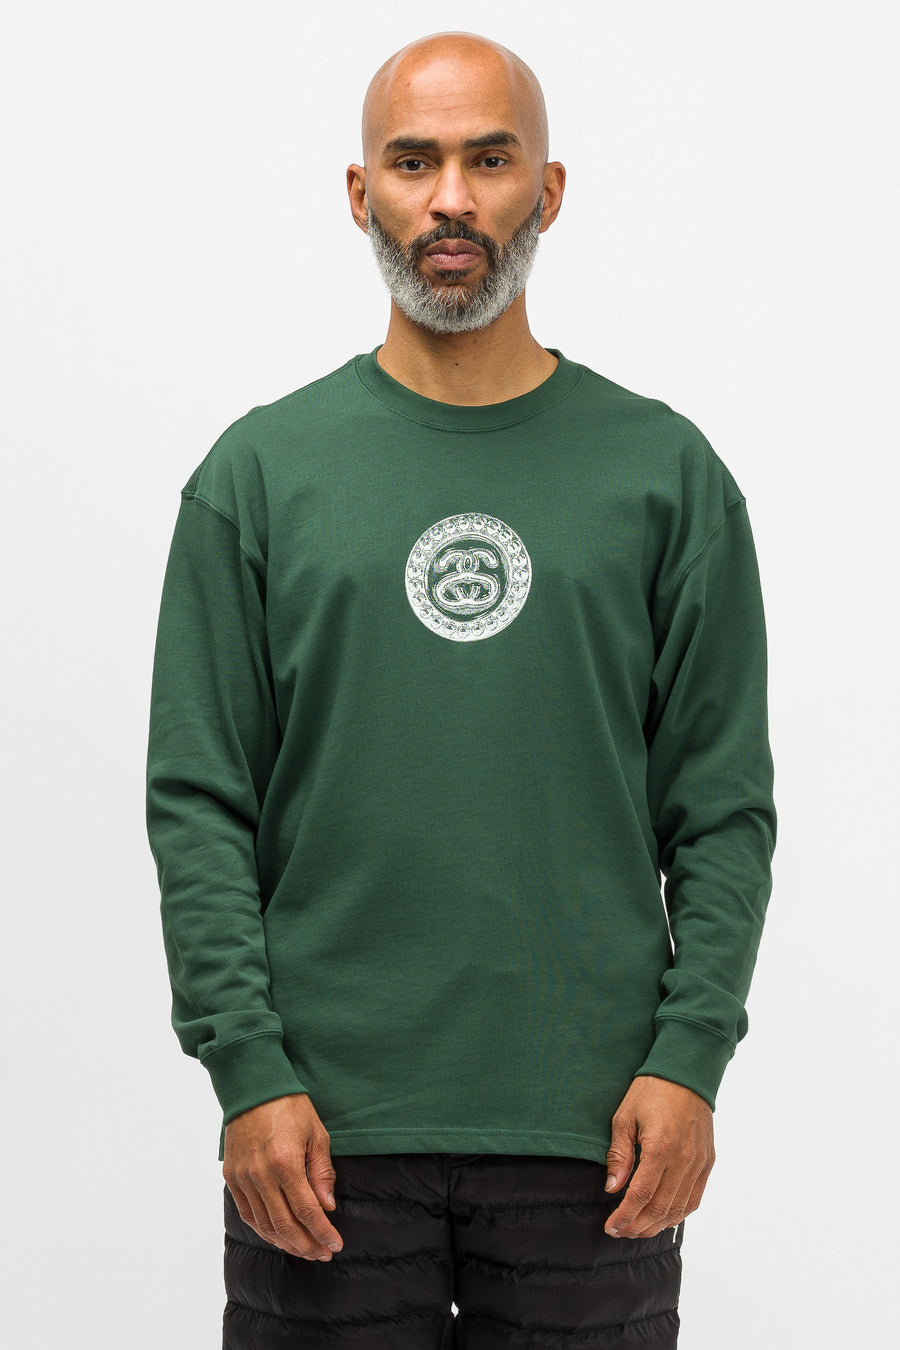 Stüssy Long-Sleeve T-Shirt in Gorge Green